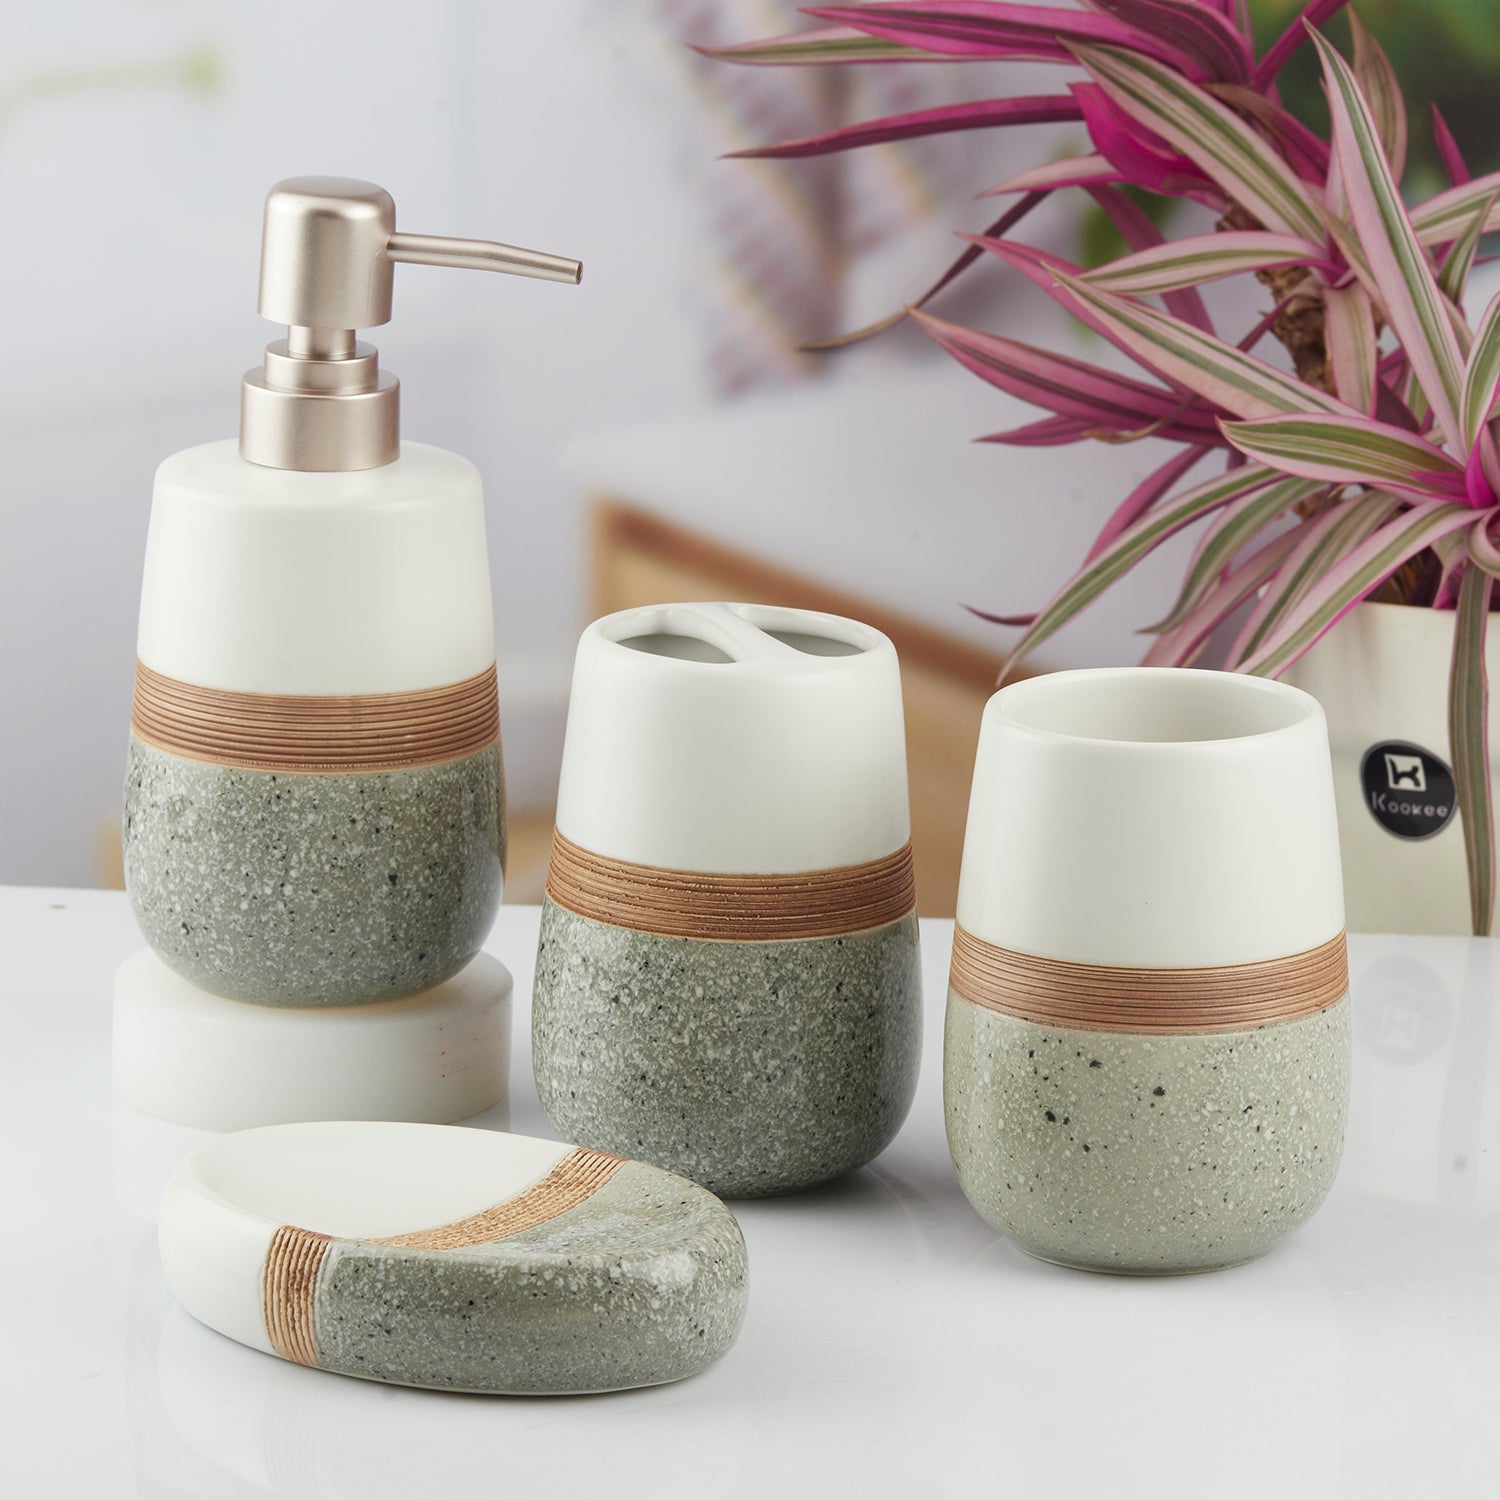 Ceramic Bathroom Set of 4 with Soap Dispenser (10375)